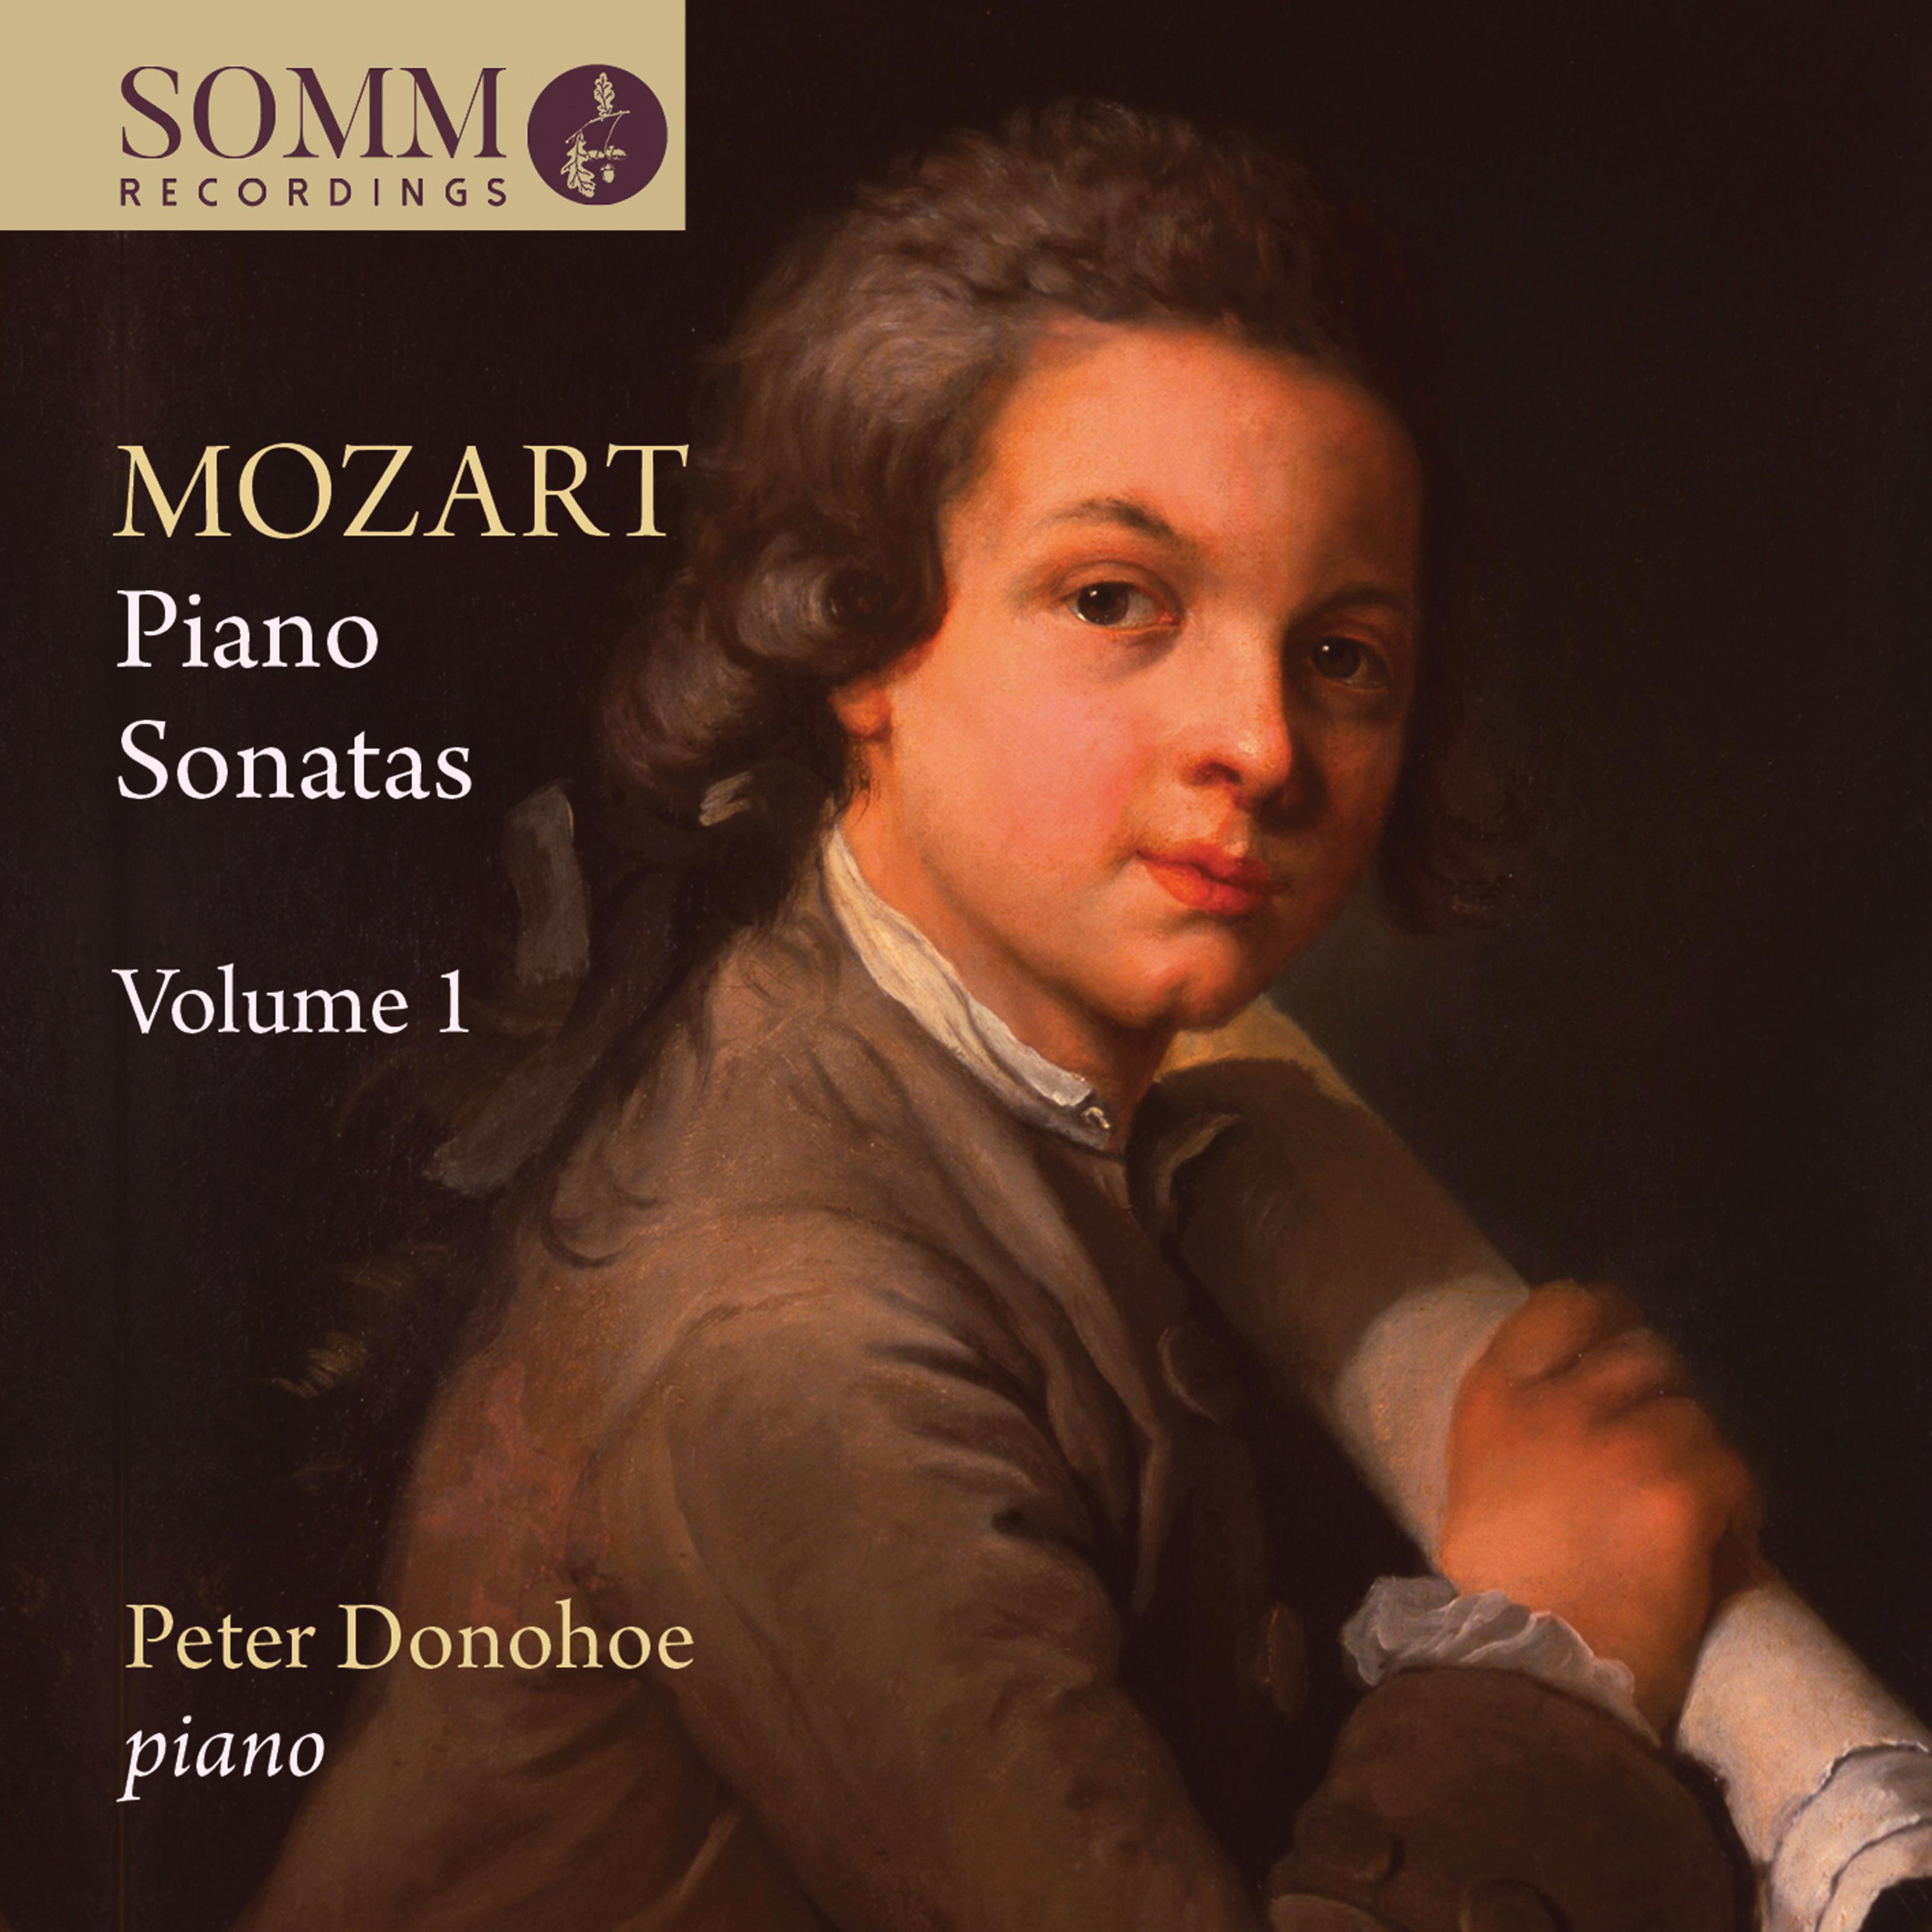 Piano Sonata No. 6 in D Major, K. 284 " Dü rnitz": II. Rondeau en polonaise